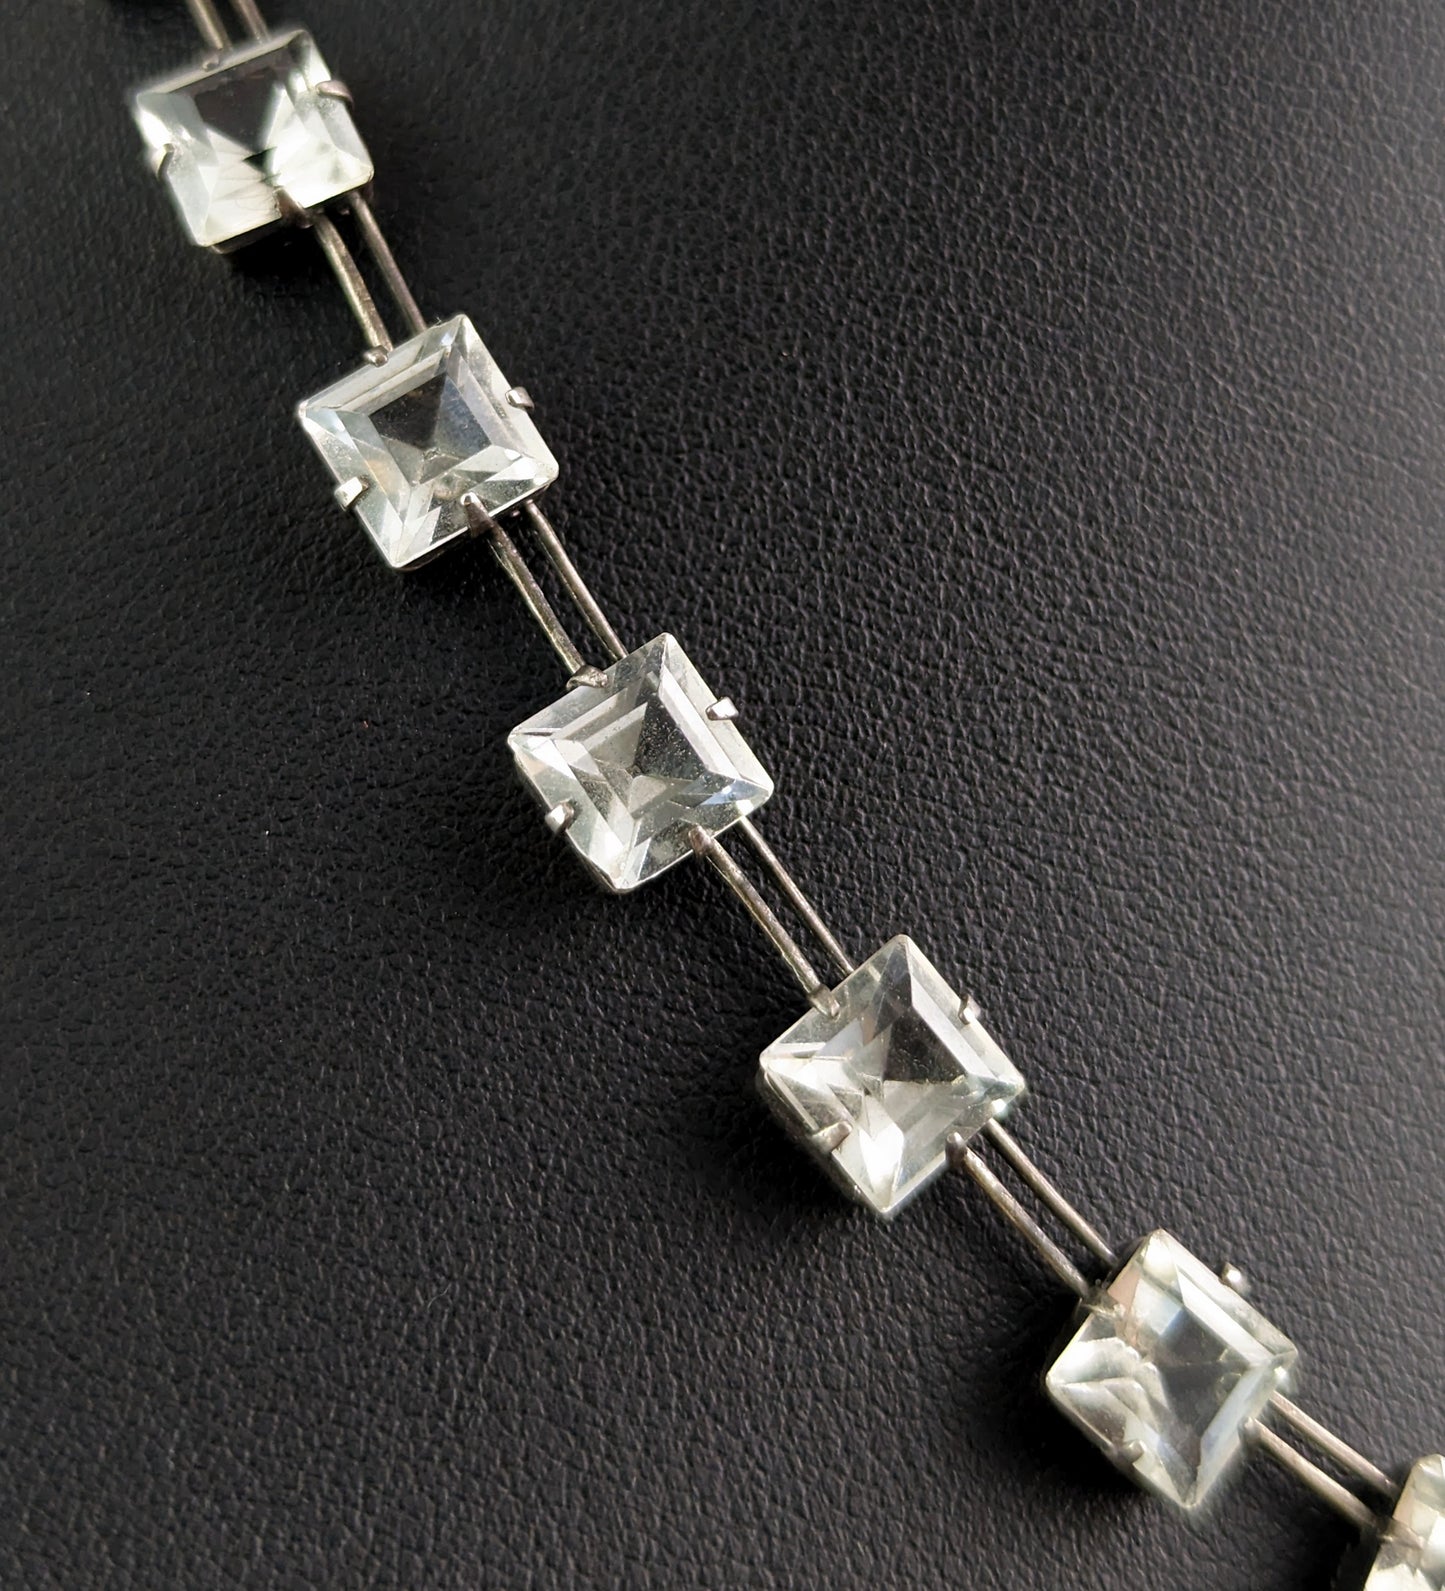 Vintage Art Deco square cut Paste Riviere necklace, sterling silver